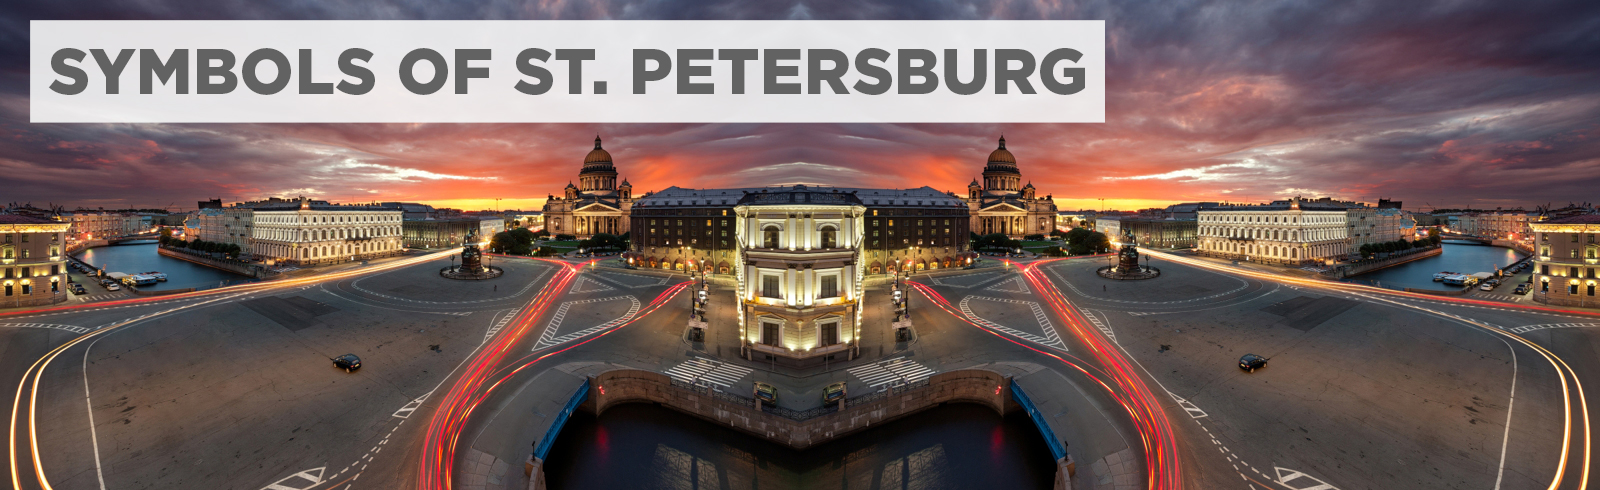 Symbols of St. Petersburg